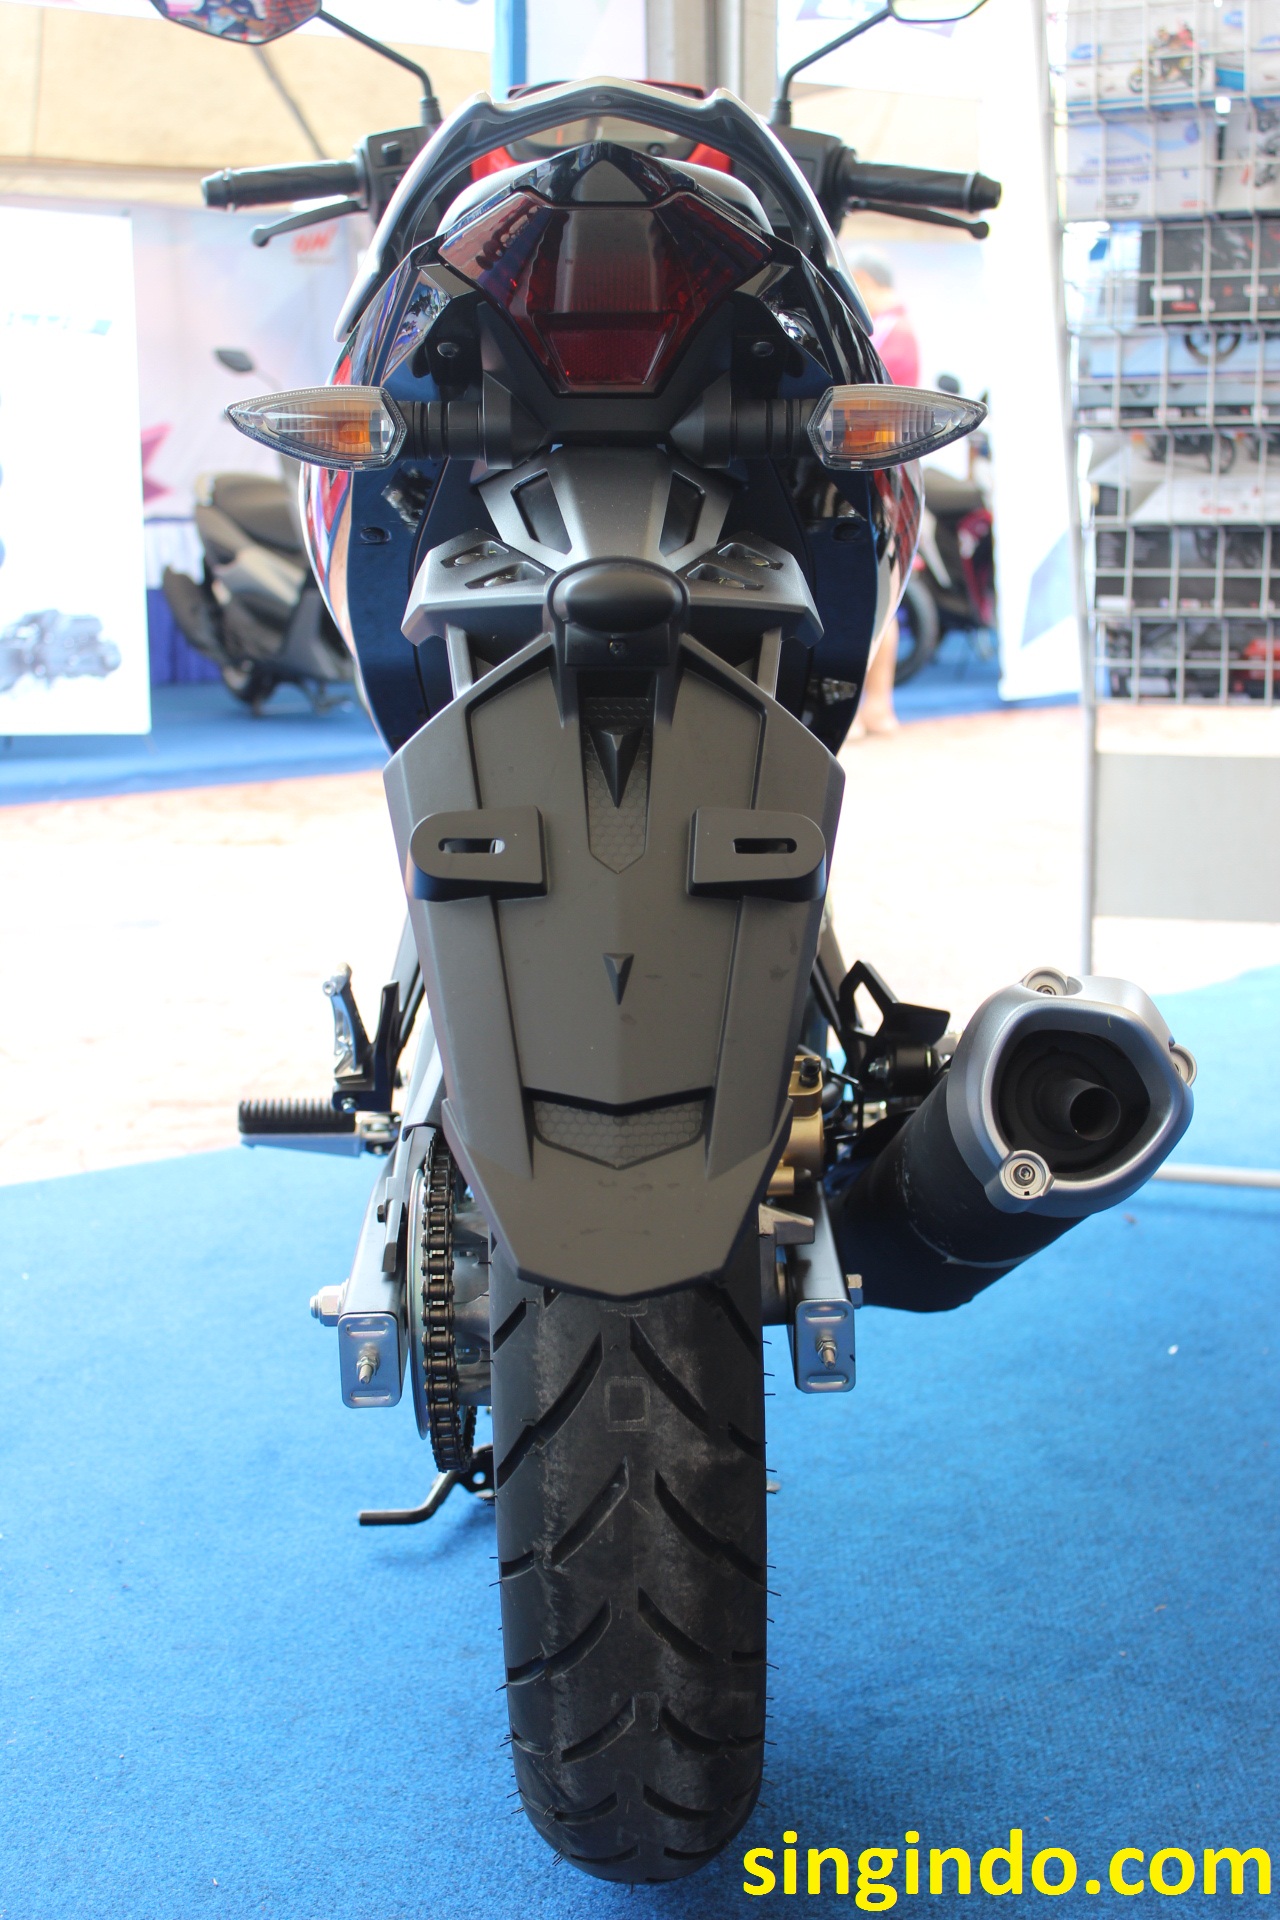 Kekuatan Utama Yamaha MX King Ada Pada Buntutnya Singindo